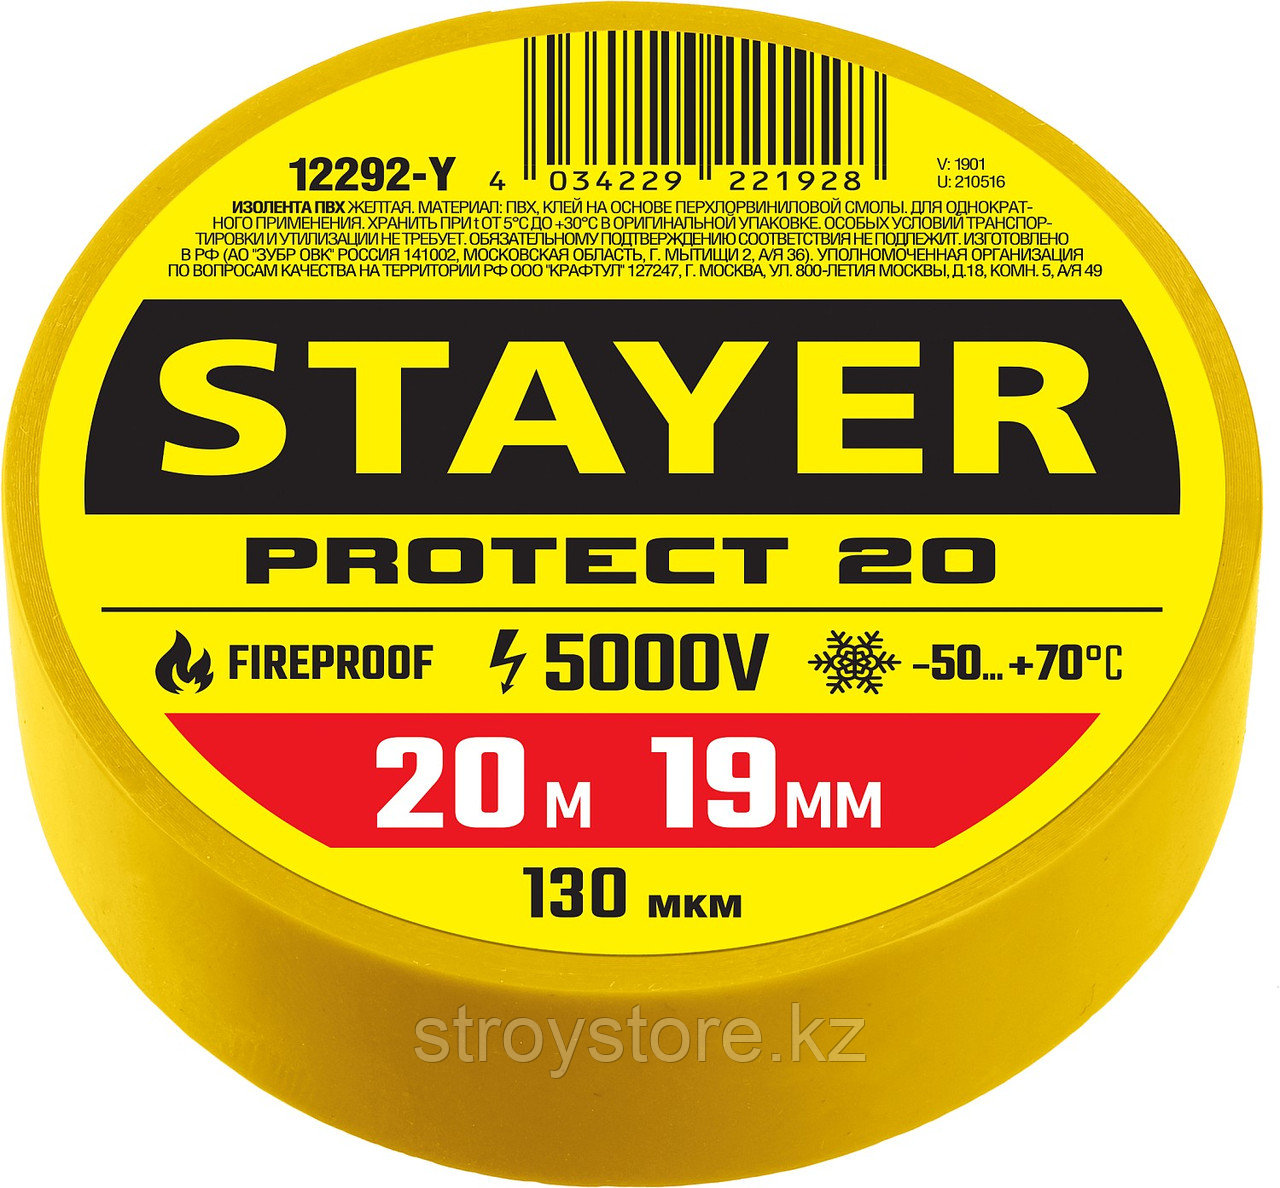 STAYER Protect-20 19 мм х 20 м желтая, Изоляционная лента ПВХ, PROFESSIONAL (12292-Y), фото 1